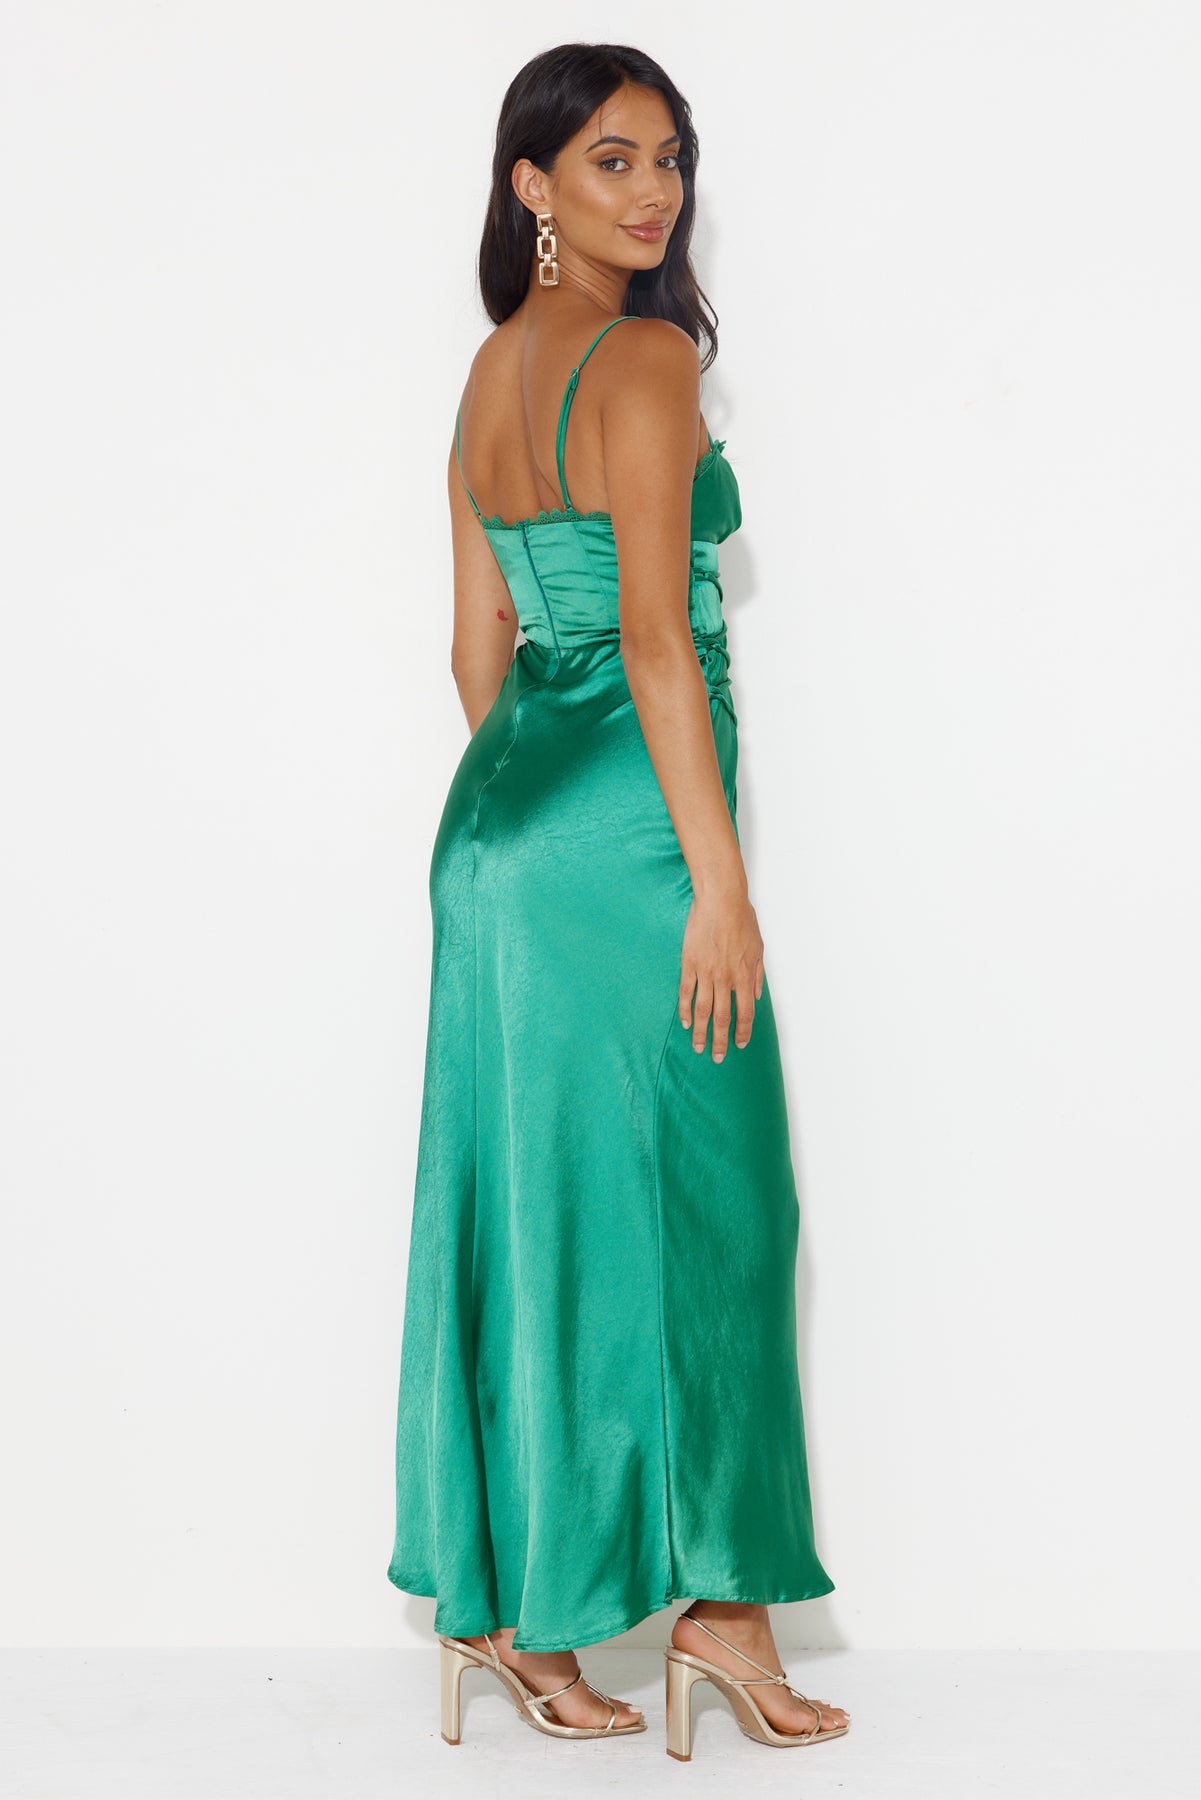 Shop Formal Dress - Dancing Pixie Satin Maxi Dress Green sixth image